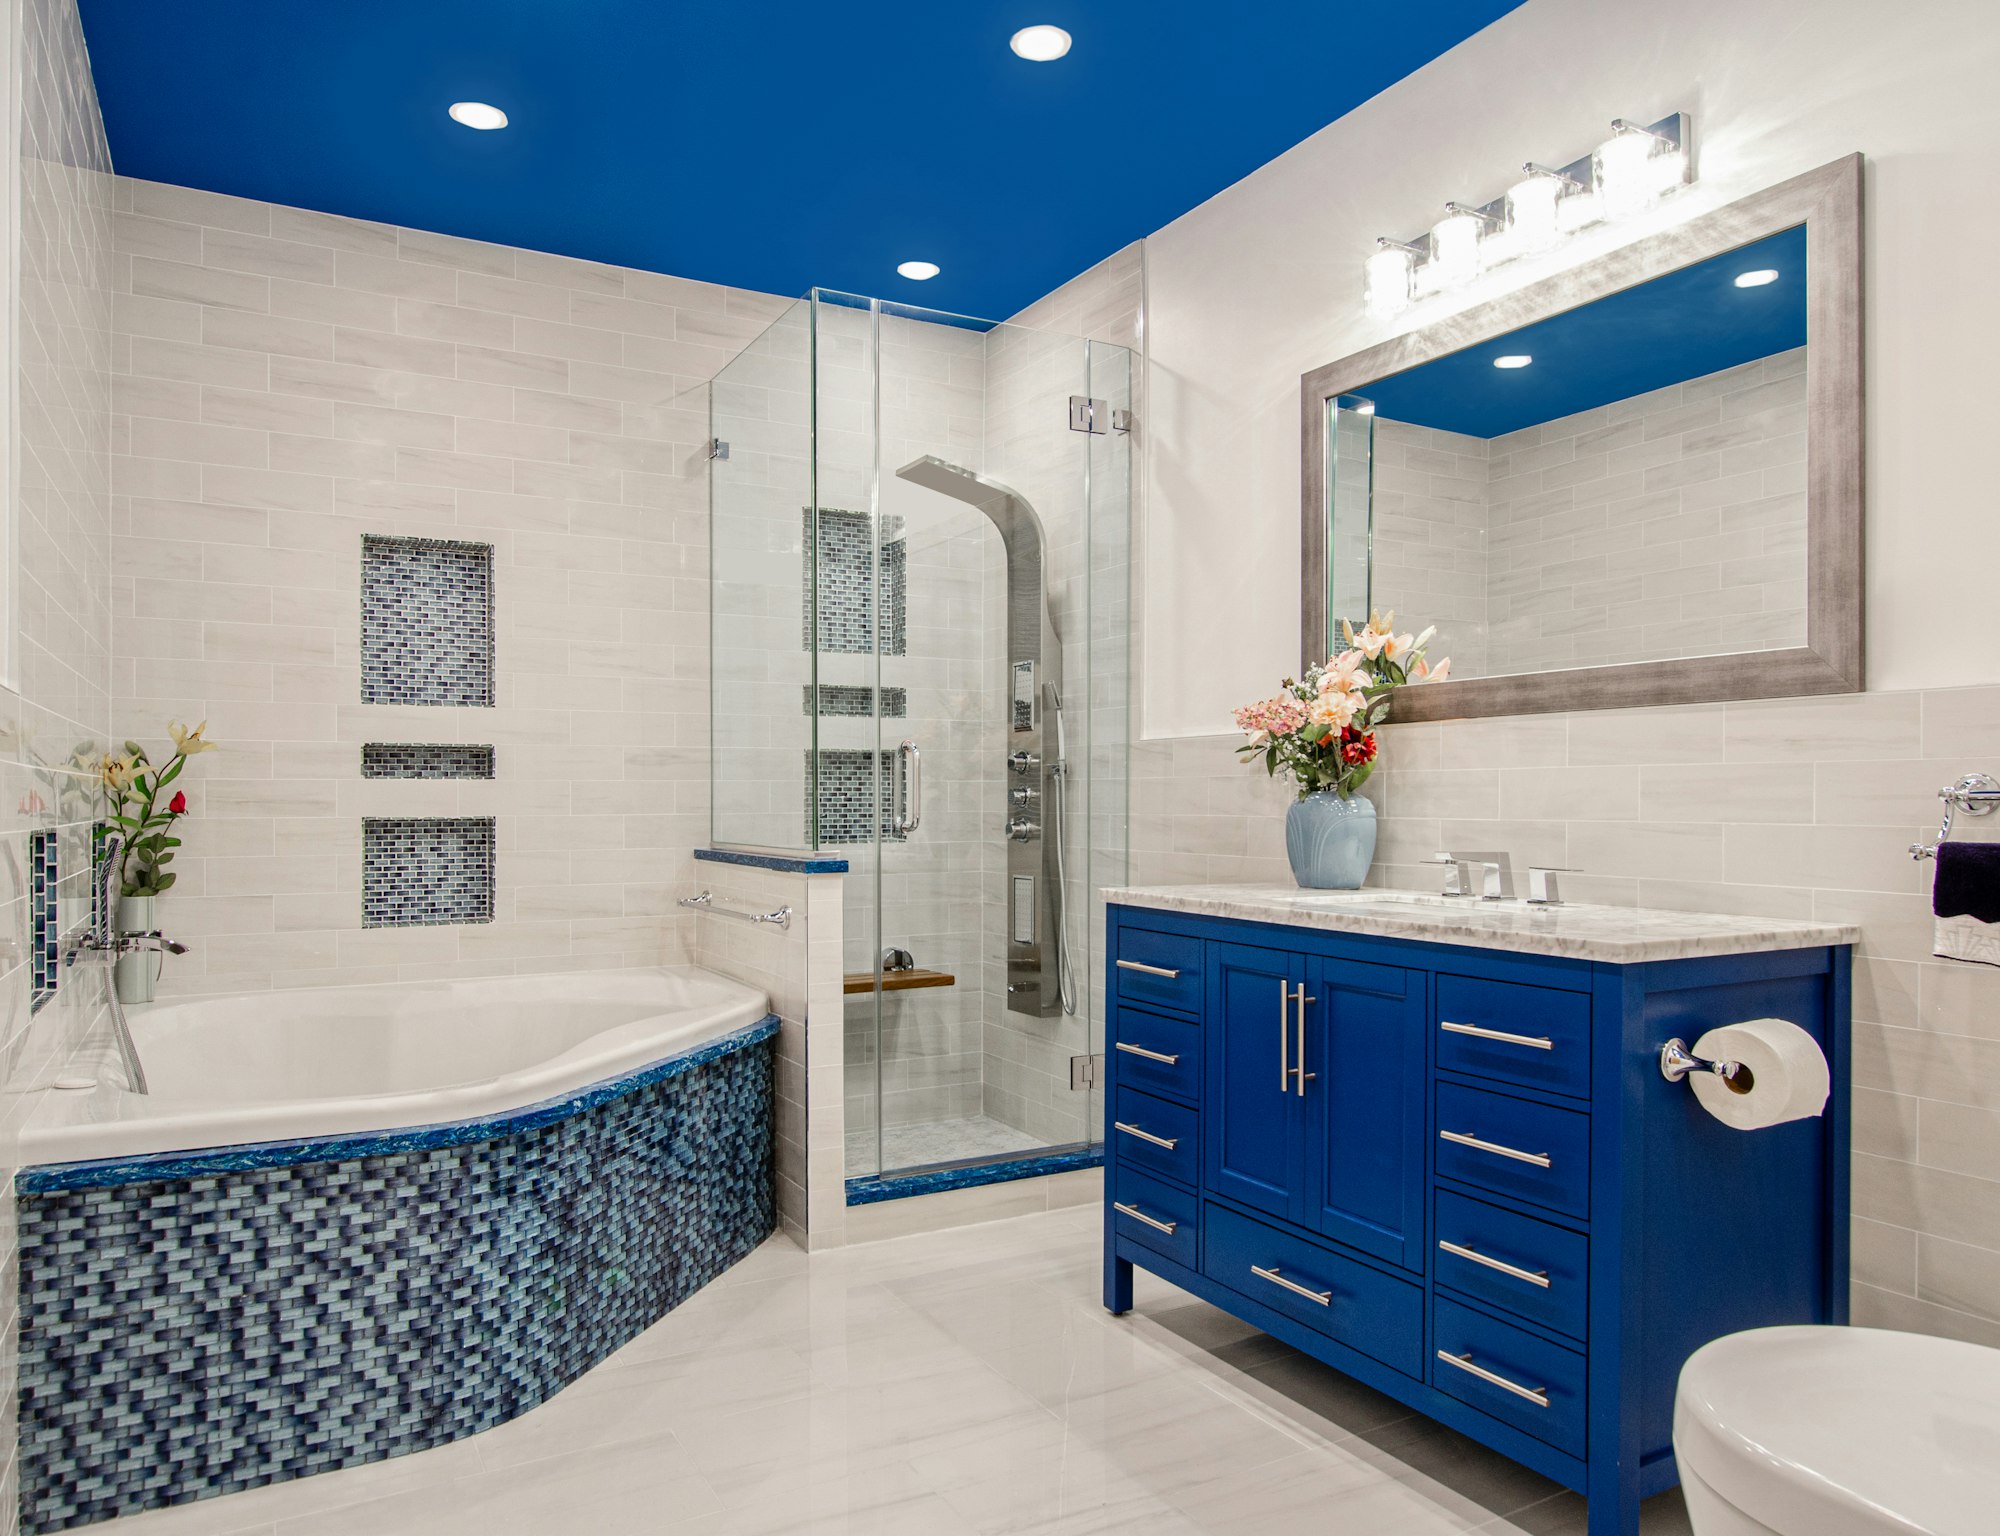  Blue and white bathroom